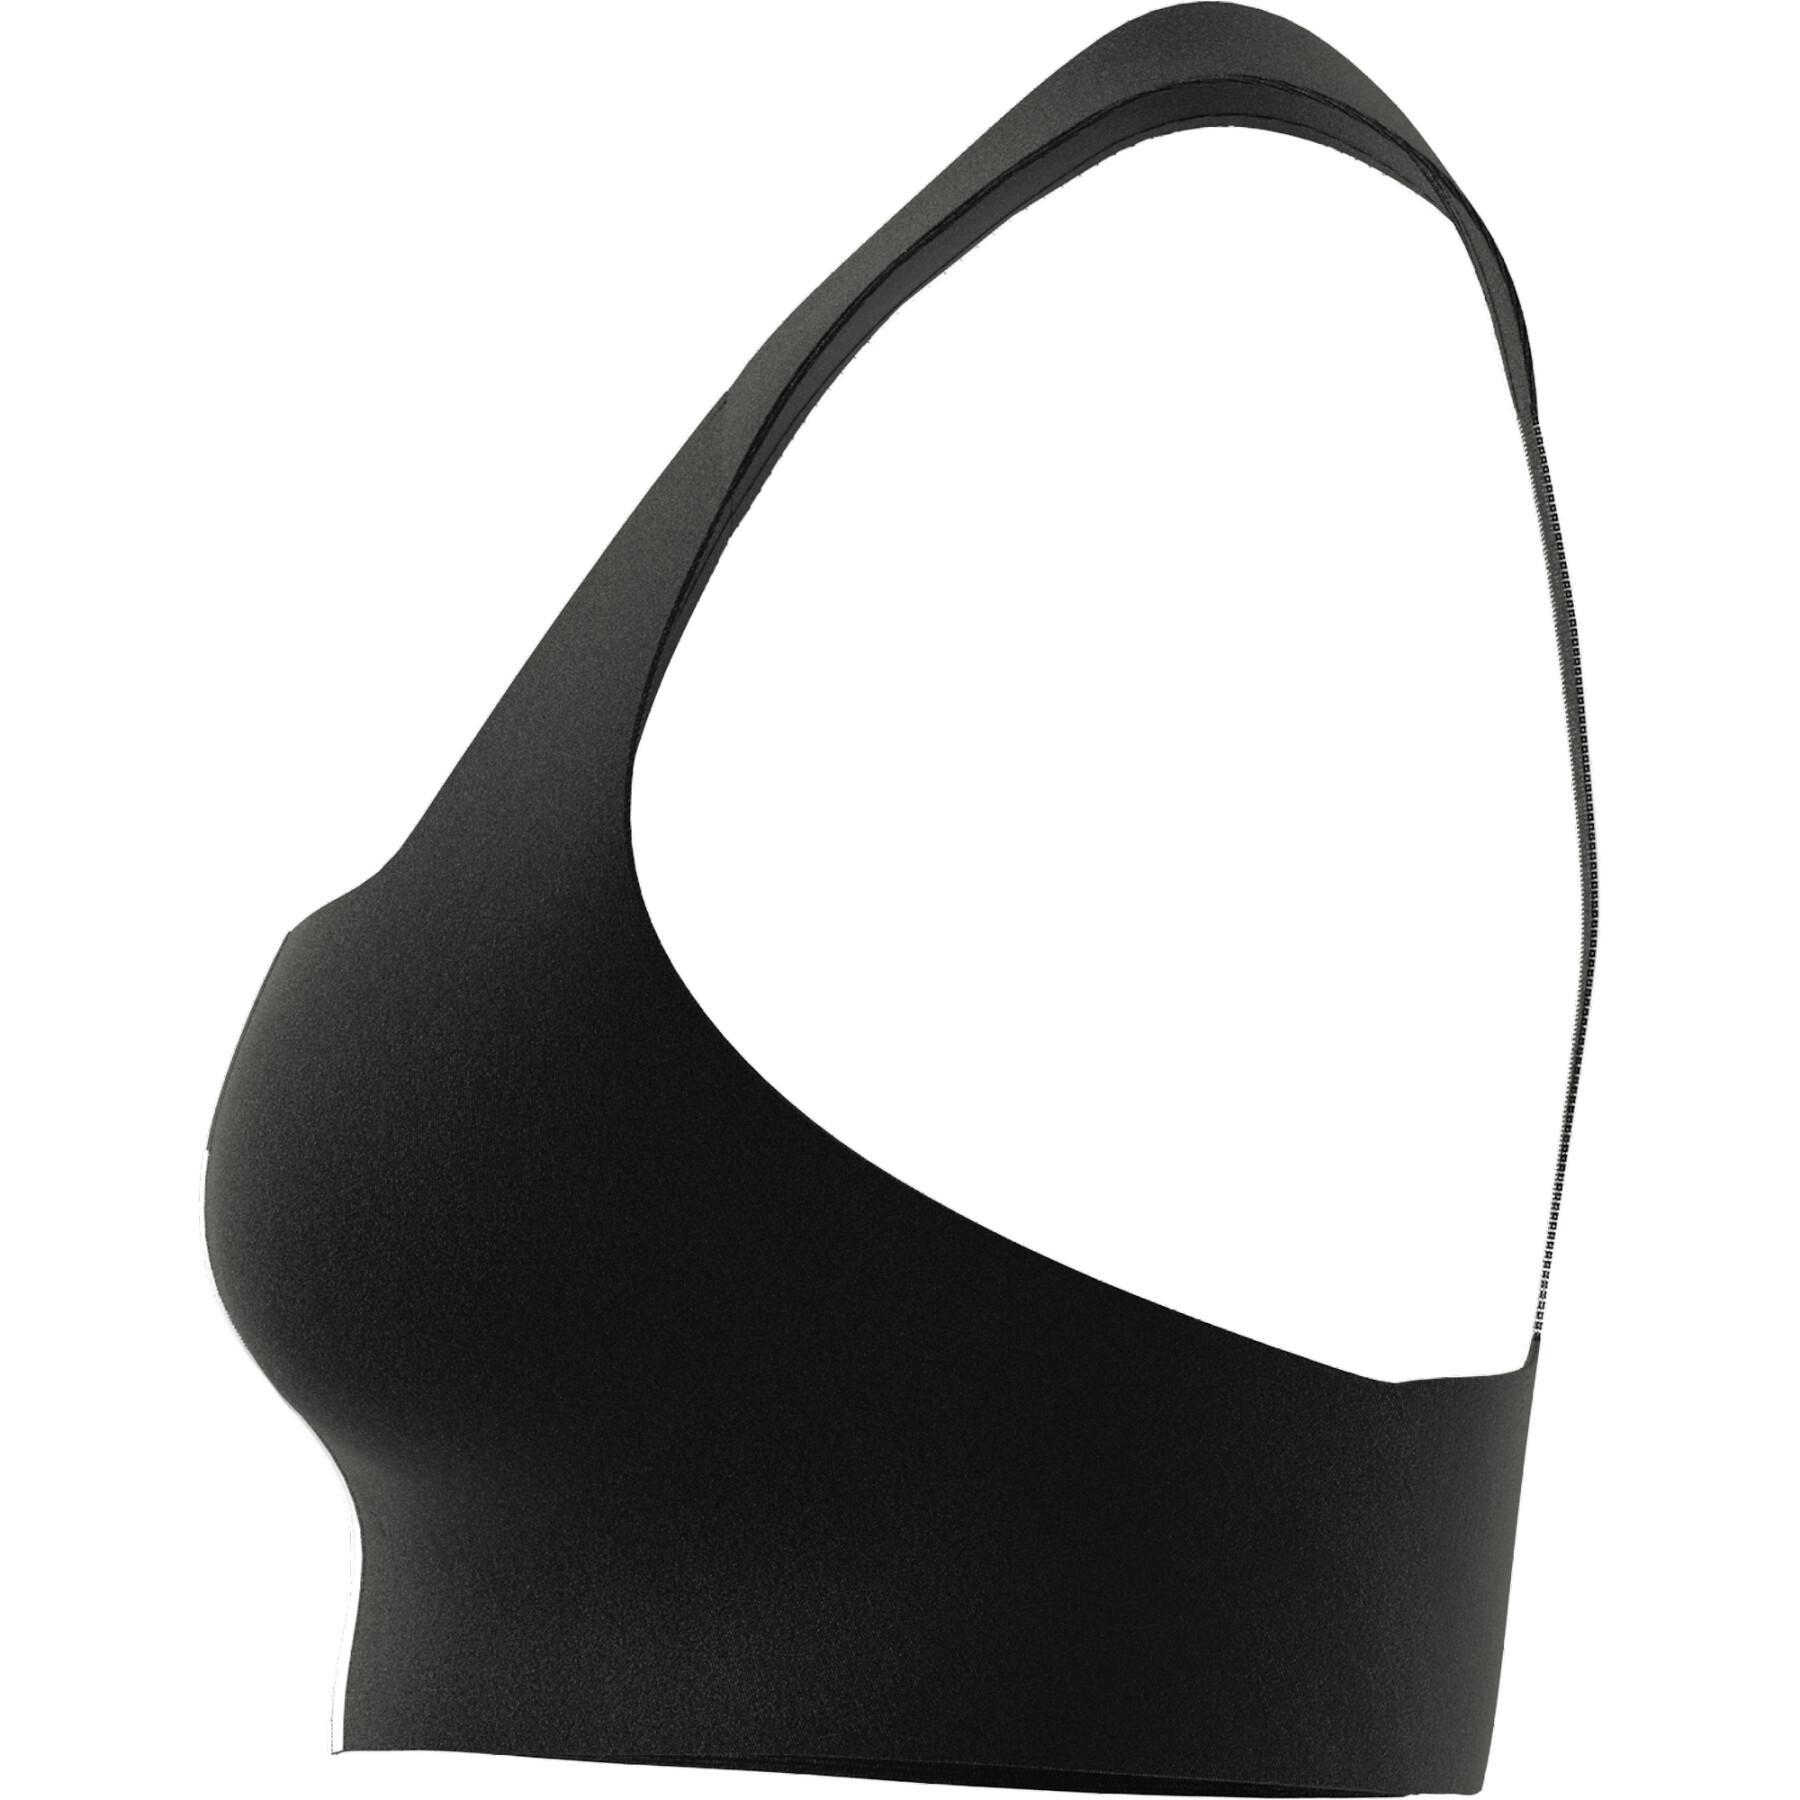 Women's bra adidas Powerimpact Training Medium-Support